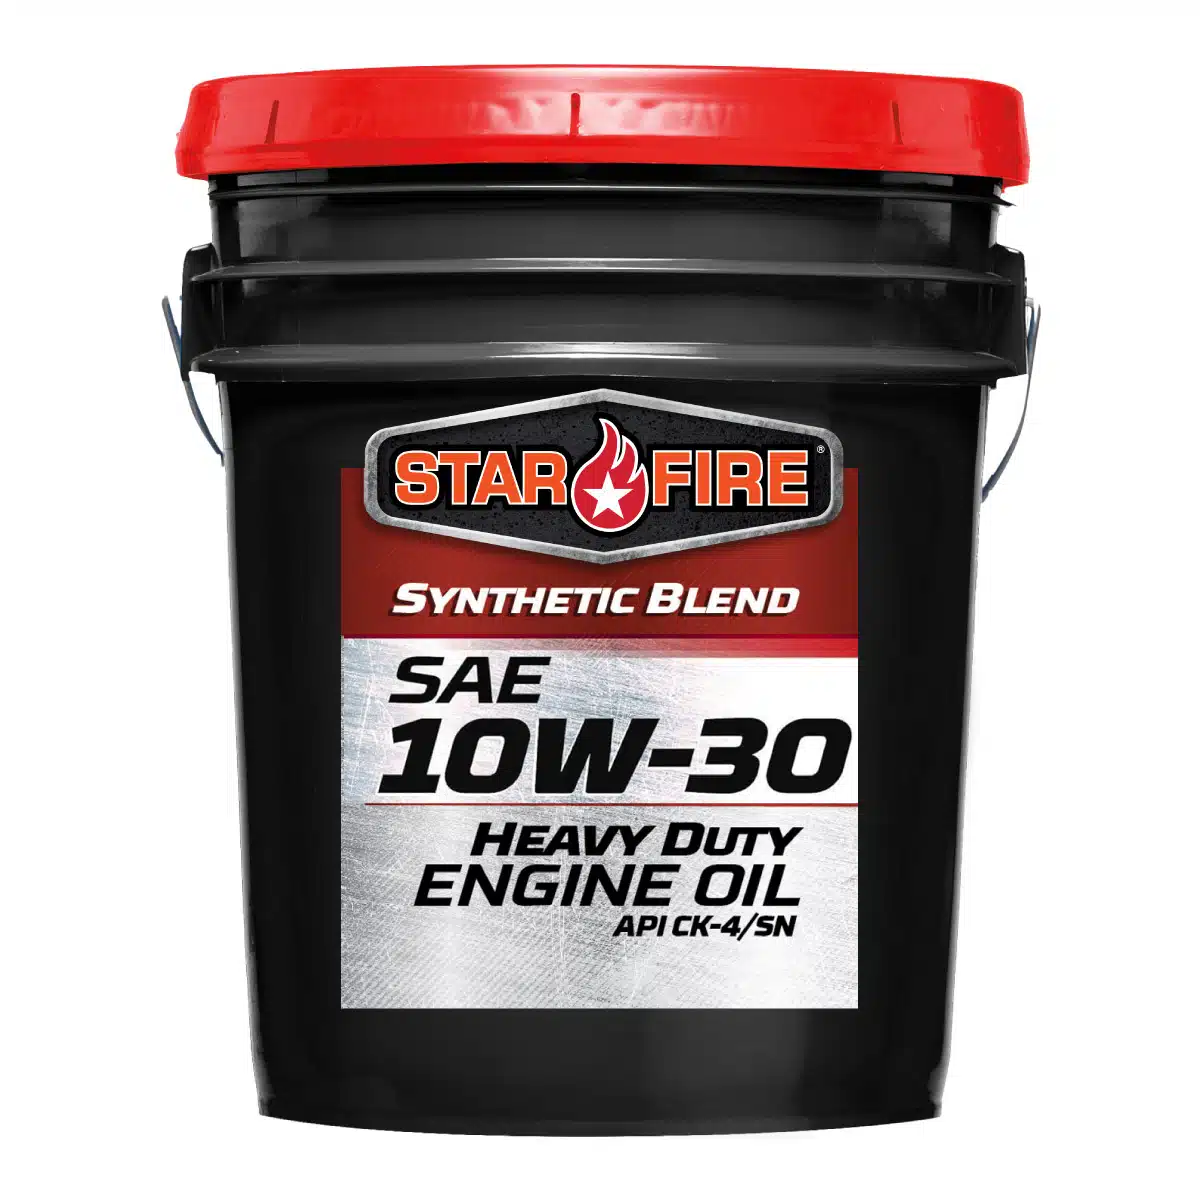 5 Gallon Synthetic Blend Heavy Duty Engine Oil 10w-30